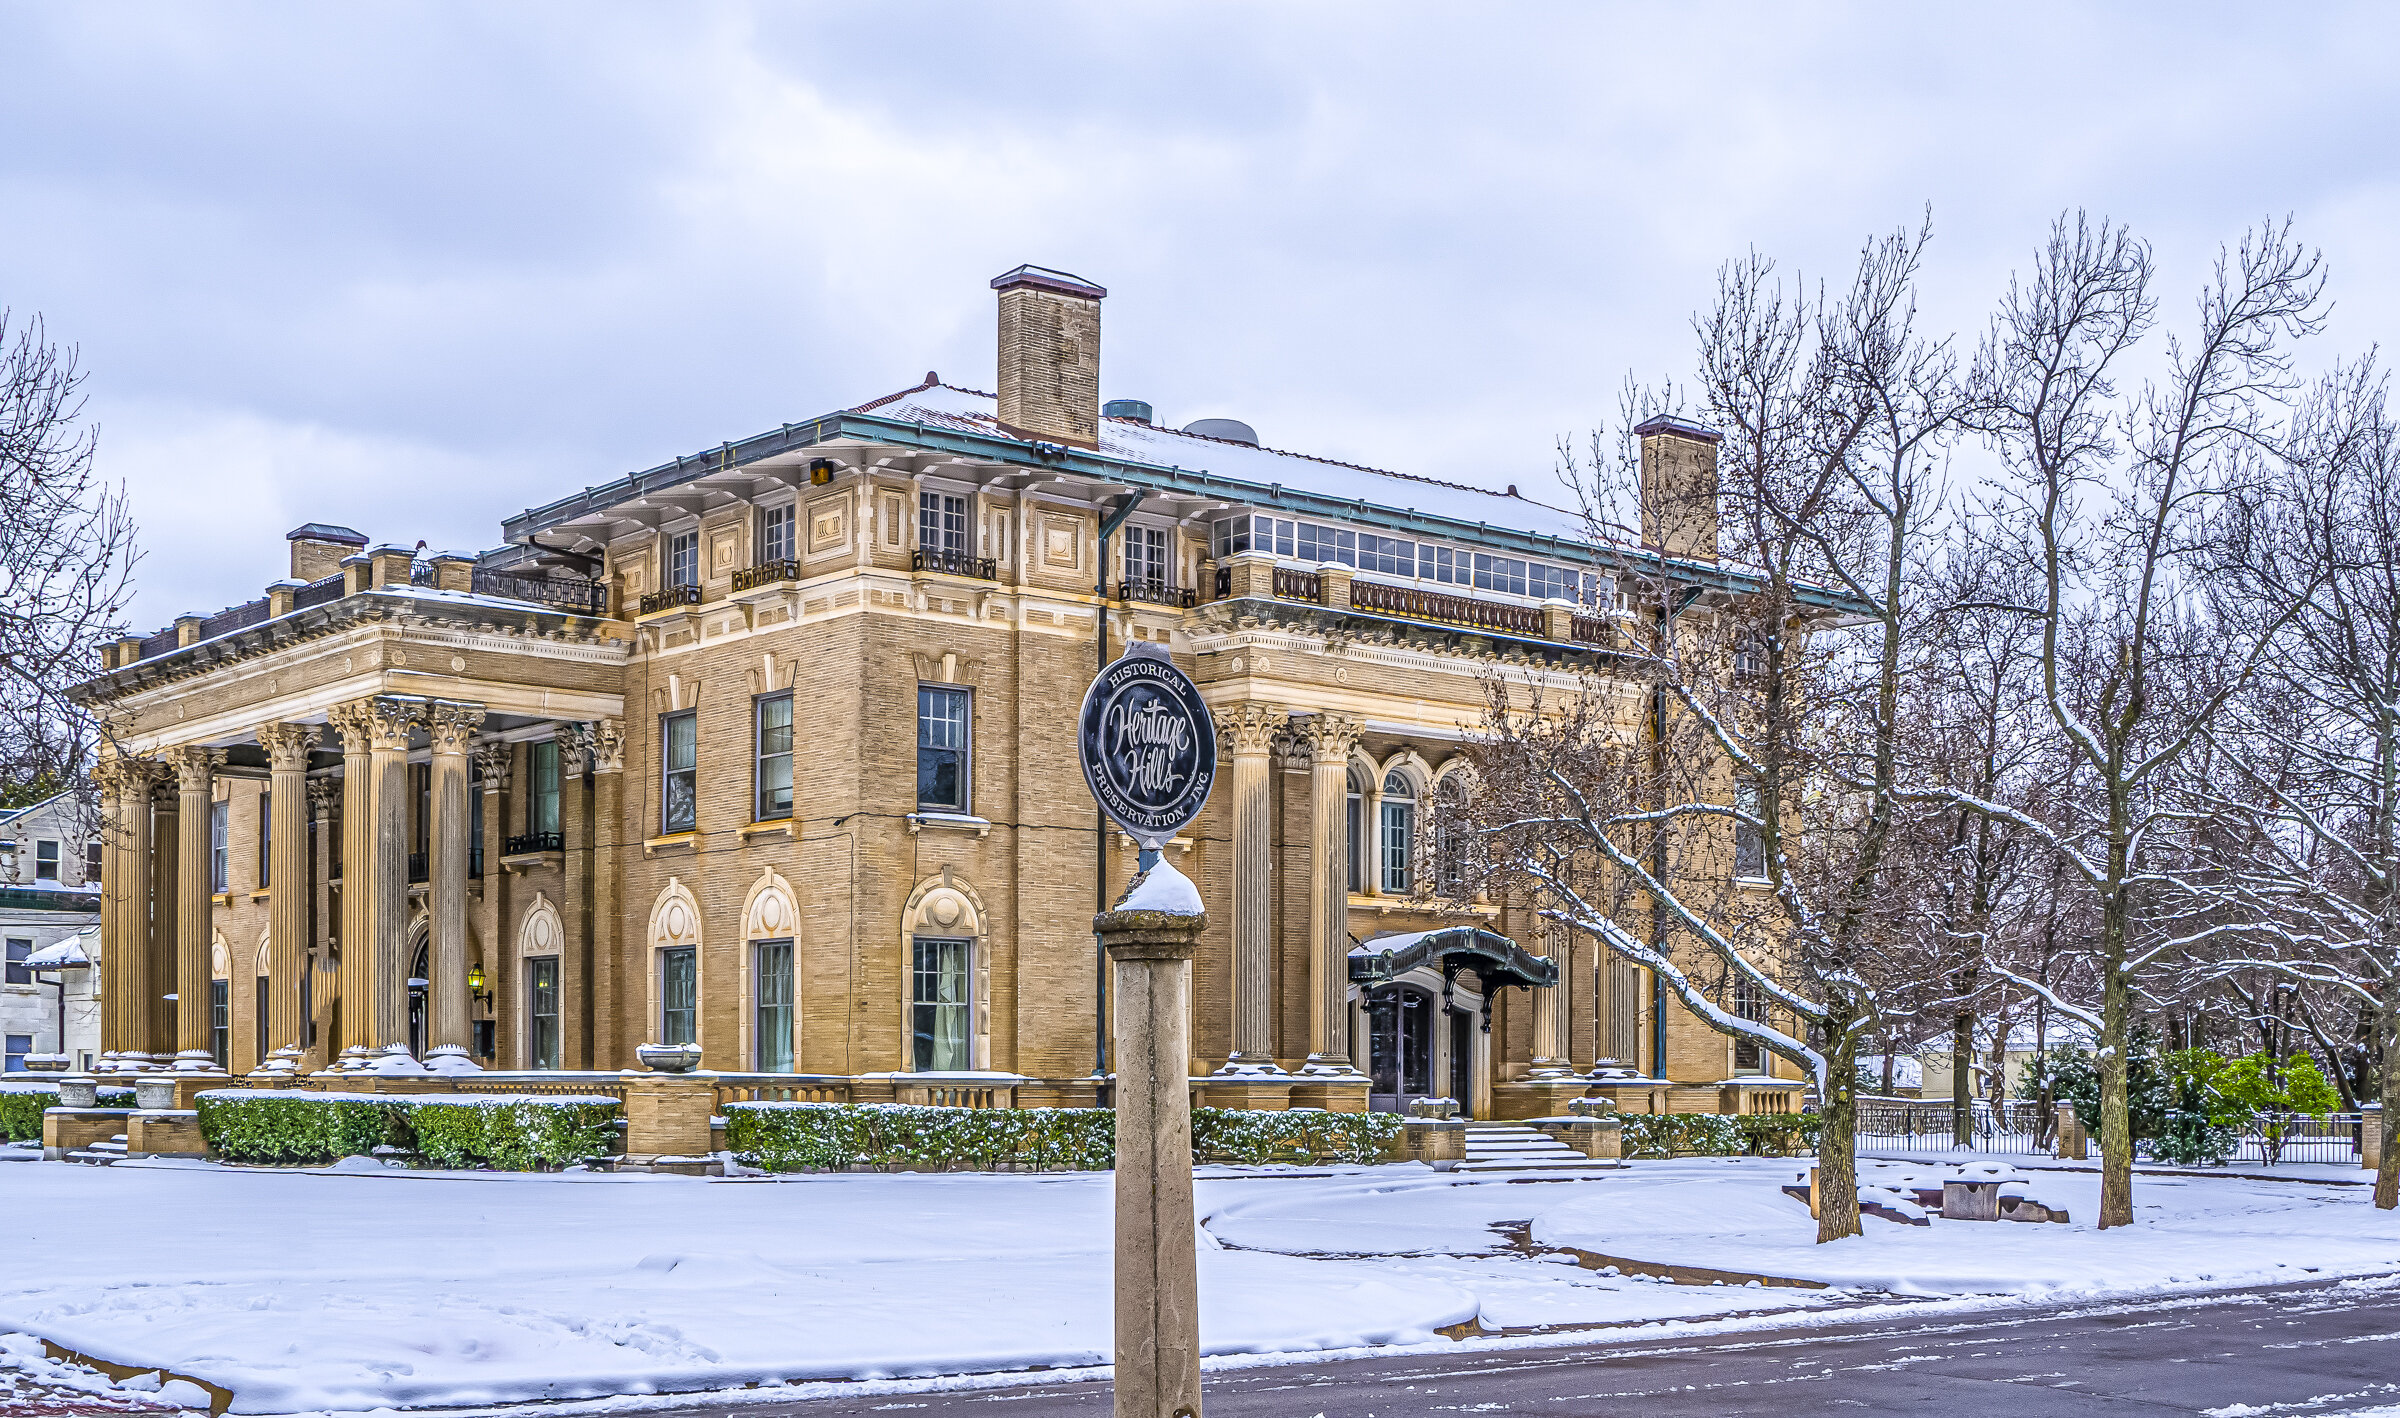 Heritage Hills Mansion in Snow